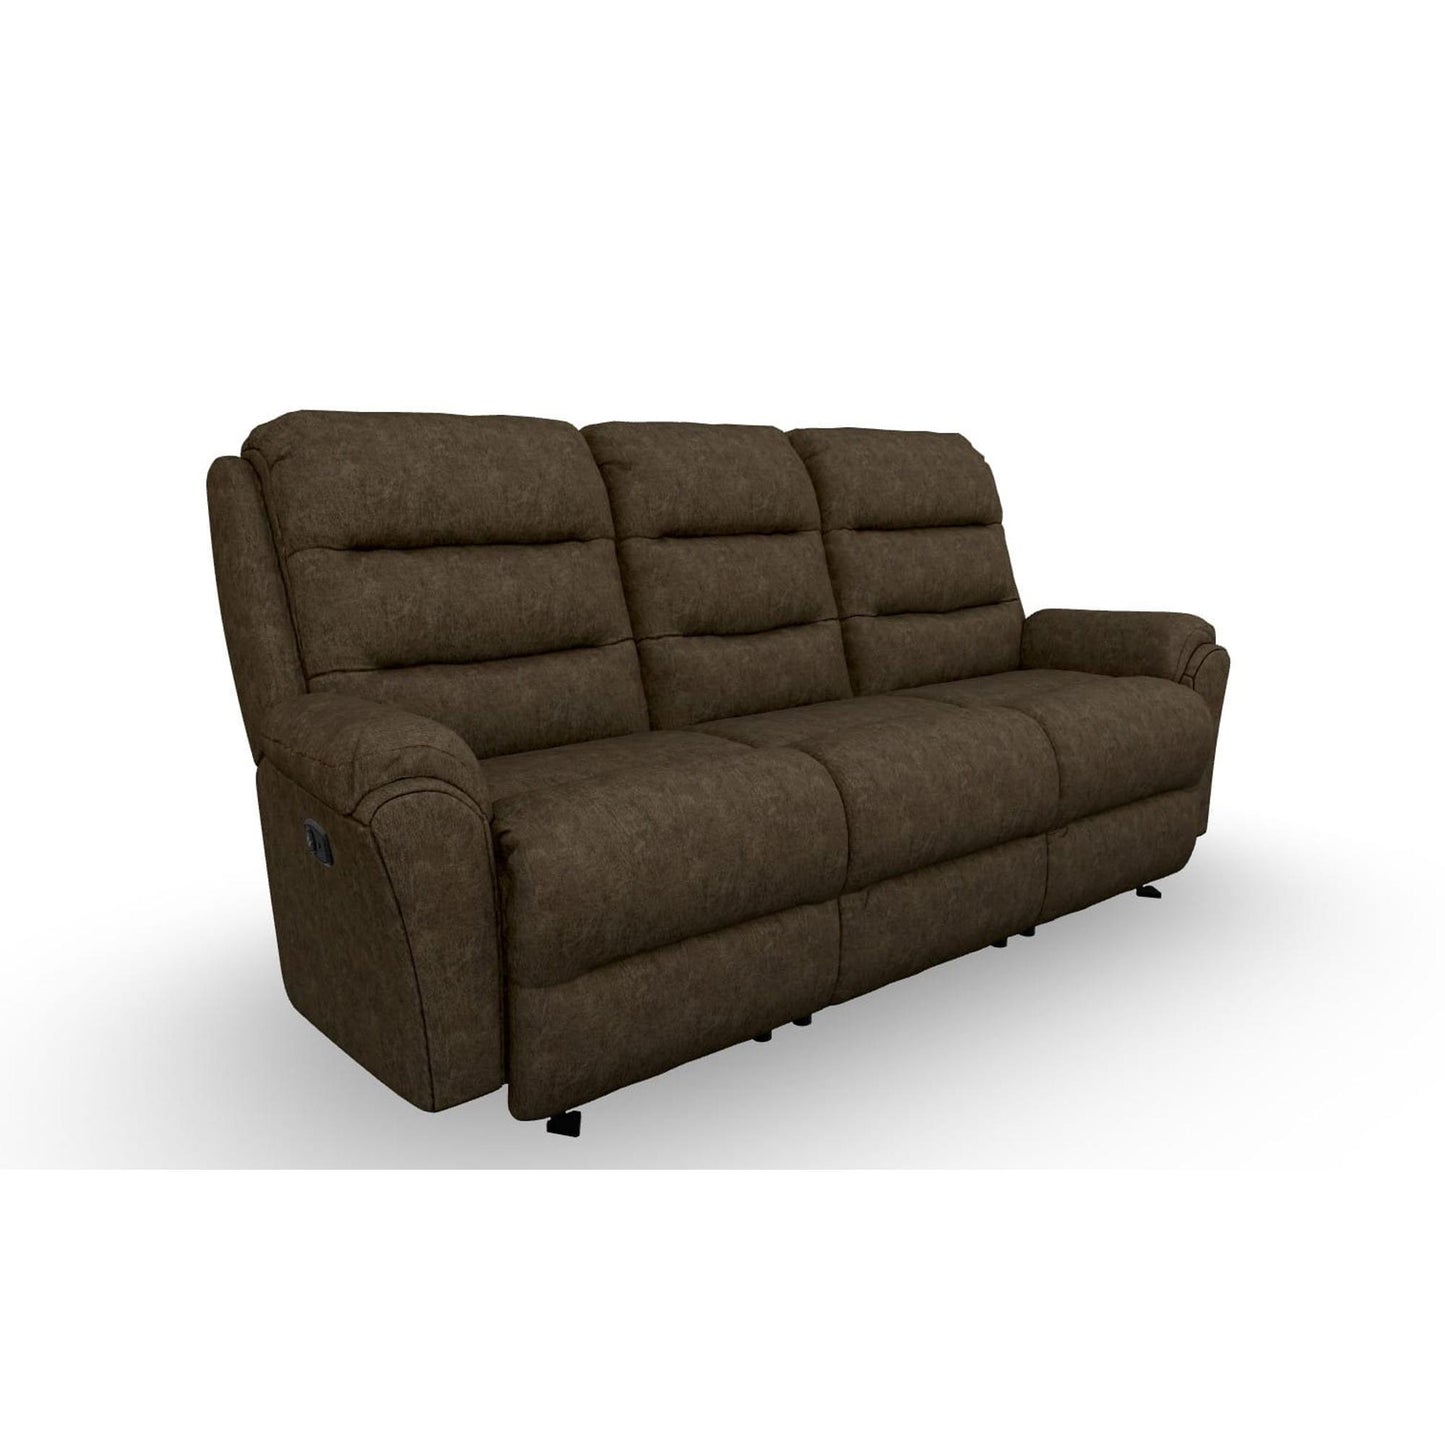 Oren Space Saver Sofa in Dapple Fabric